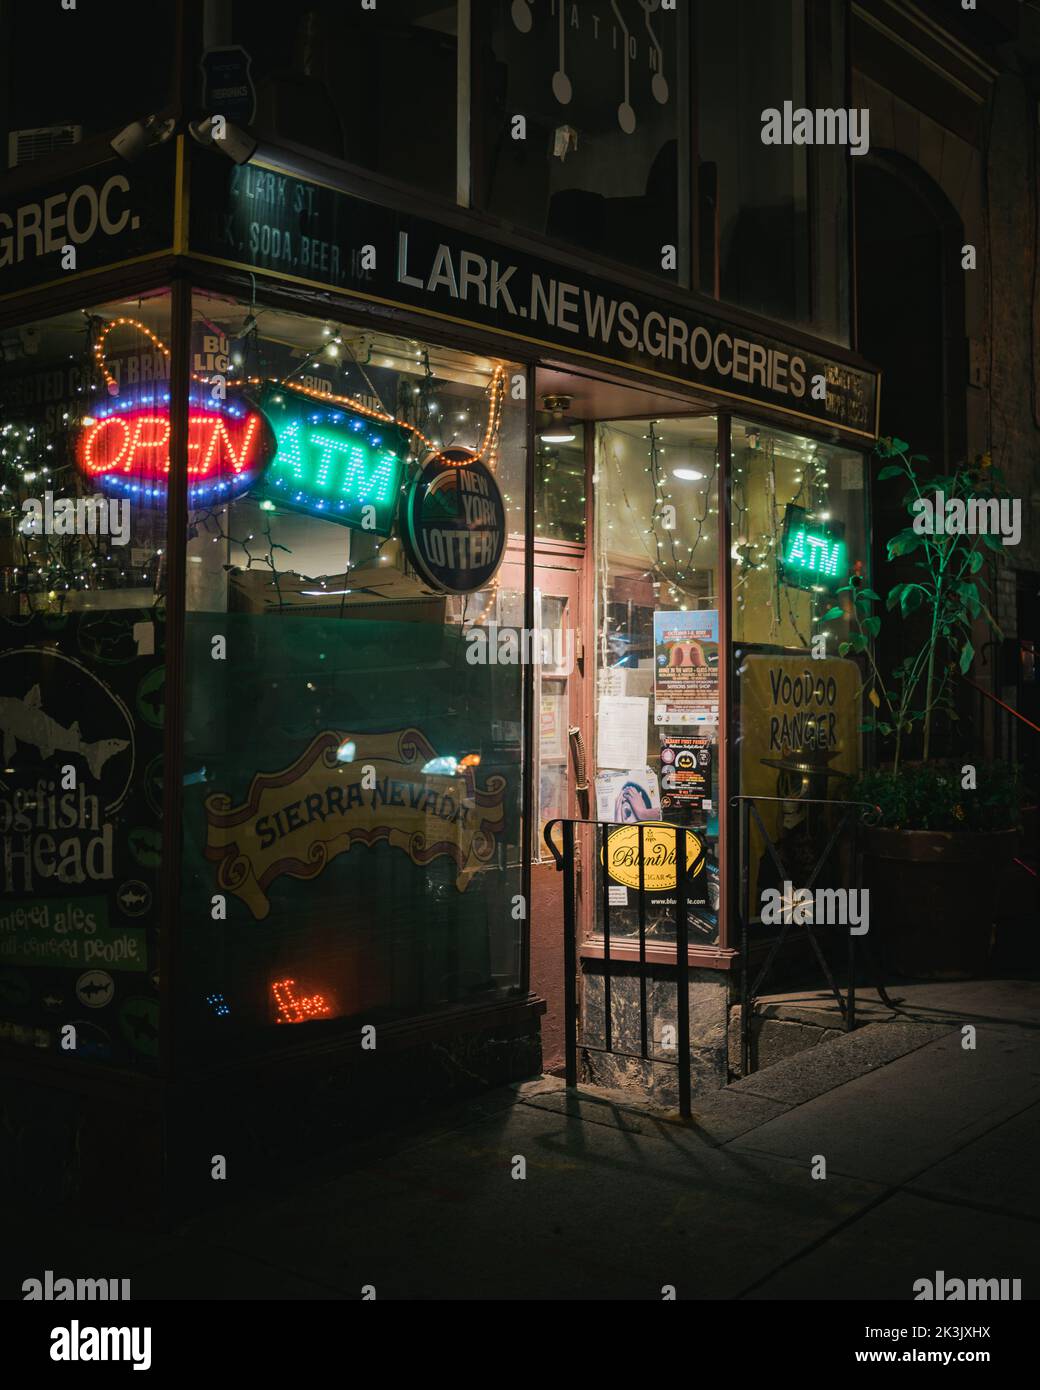 Lark News & Grocery sign in Night, Albany, New York Stockfoto